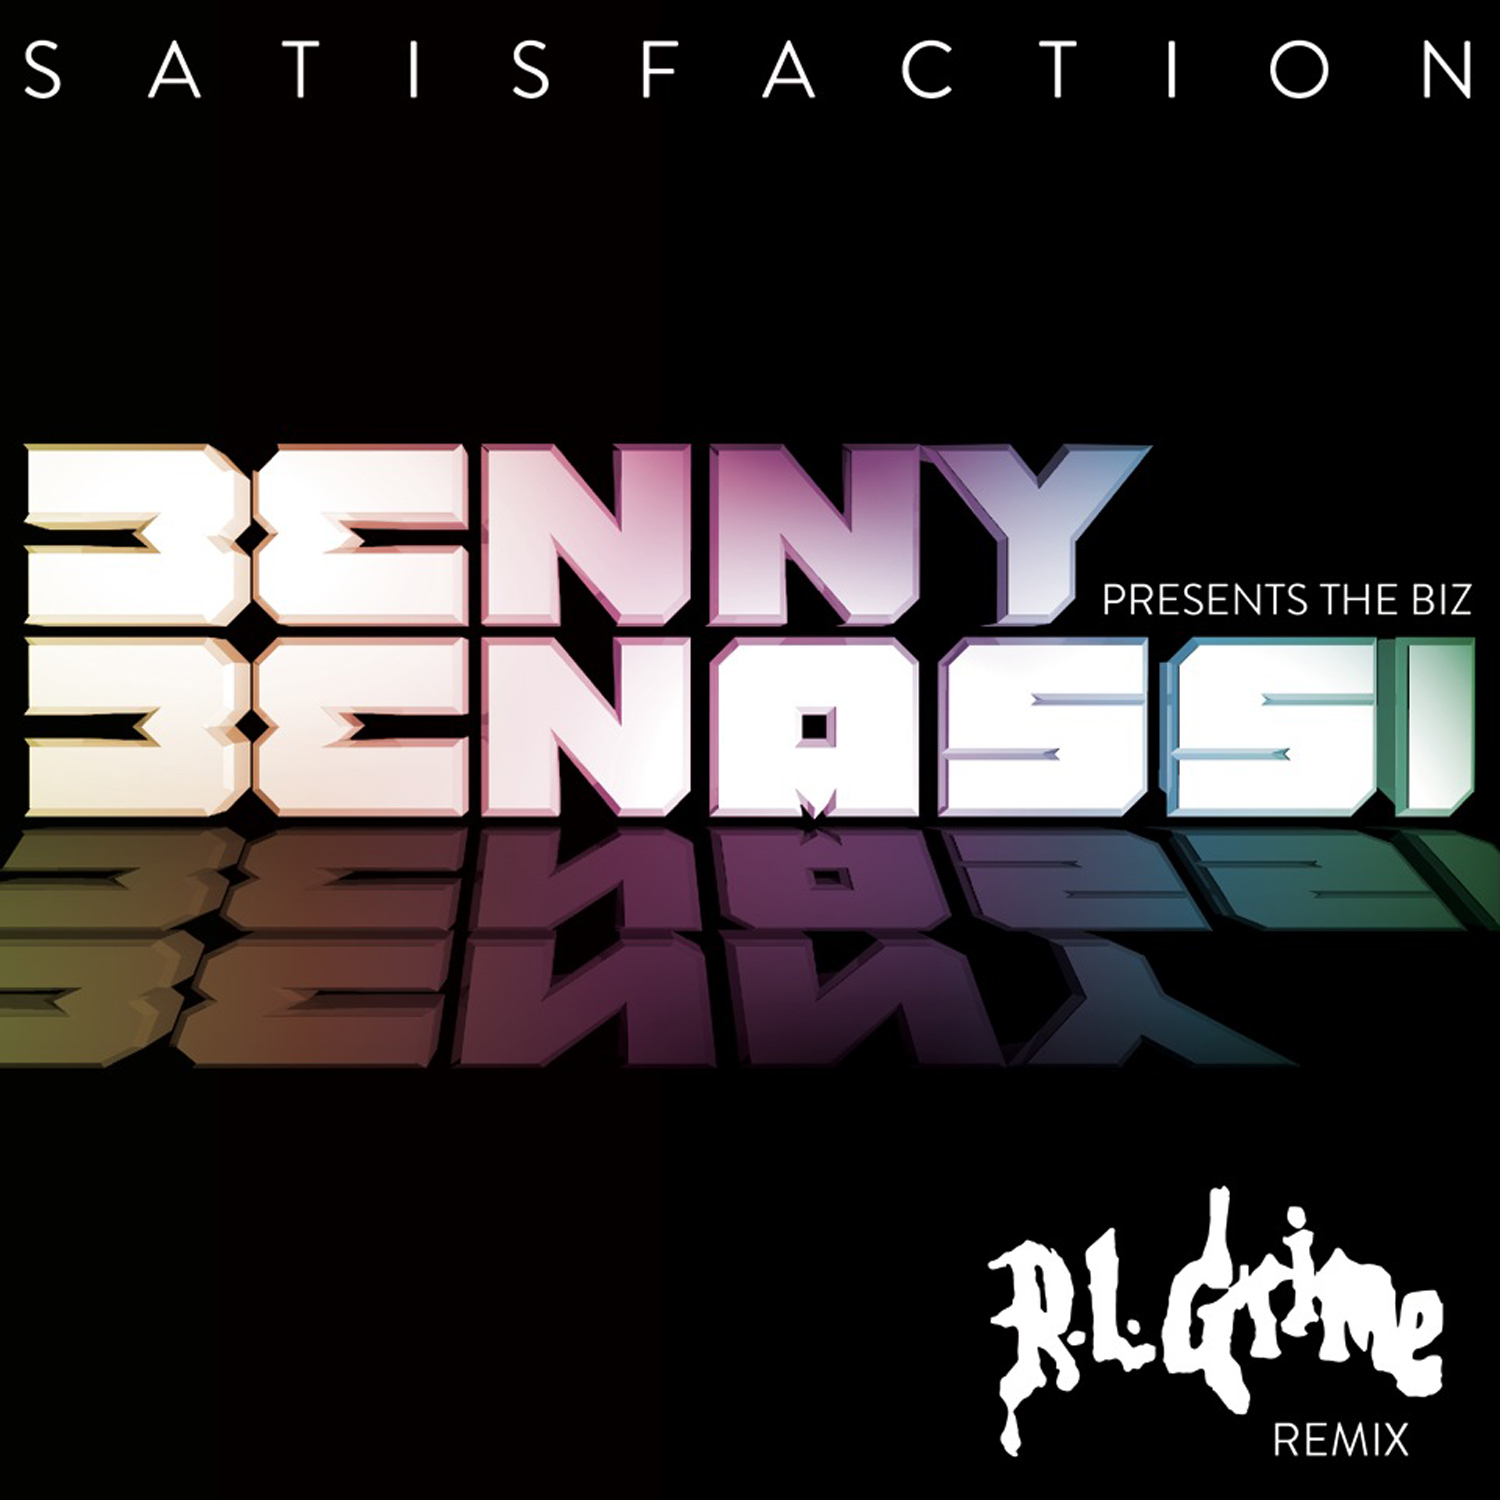 Dhawunirodha Satisfaction (RL Grime Remix) - Benny Benassi (Preview)